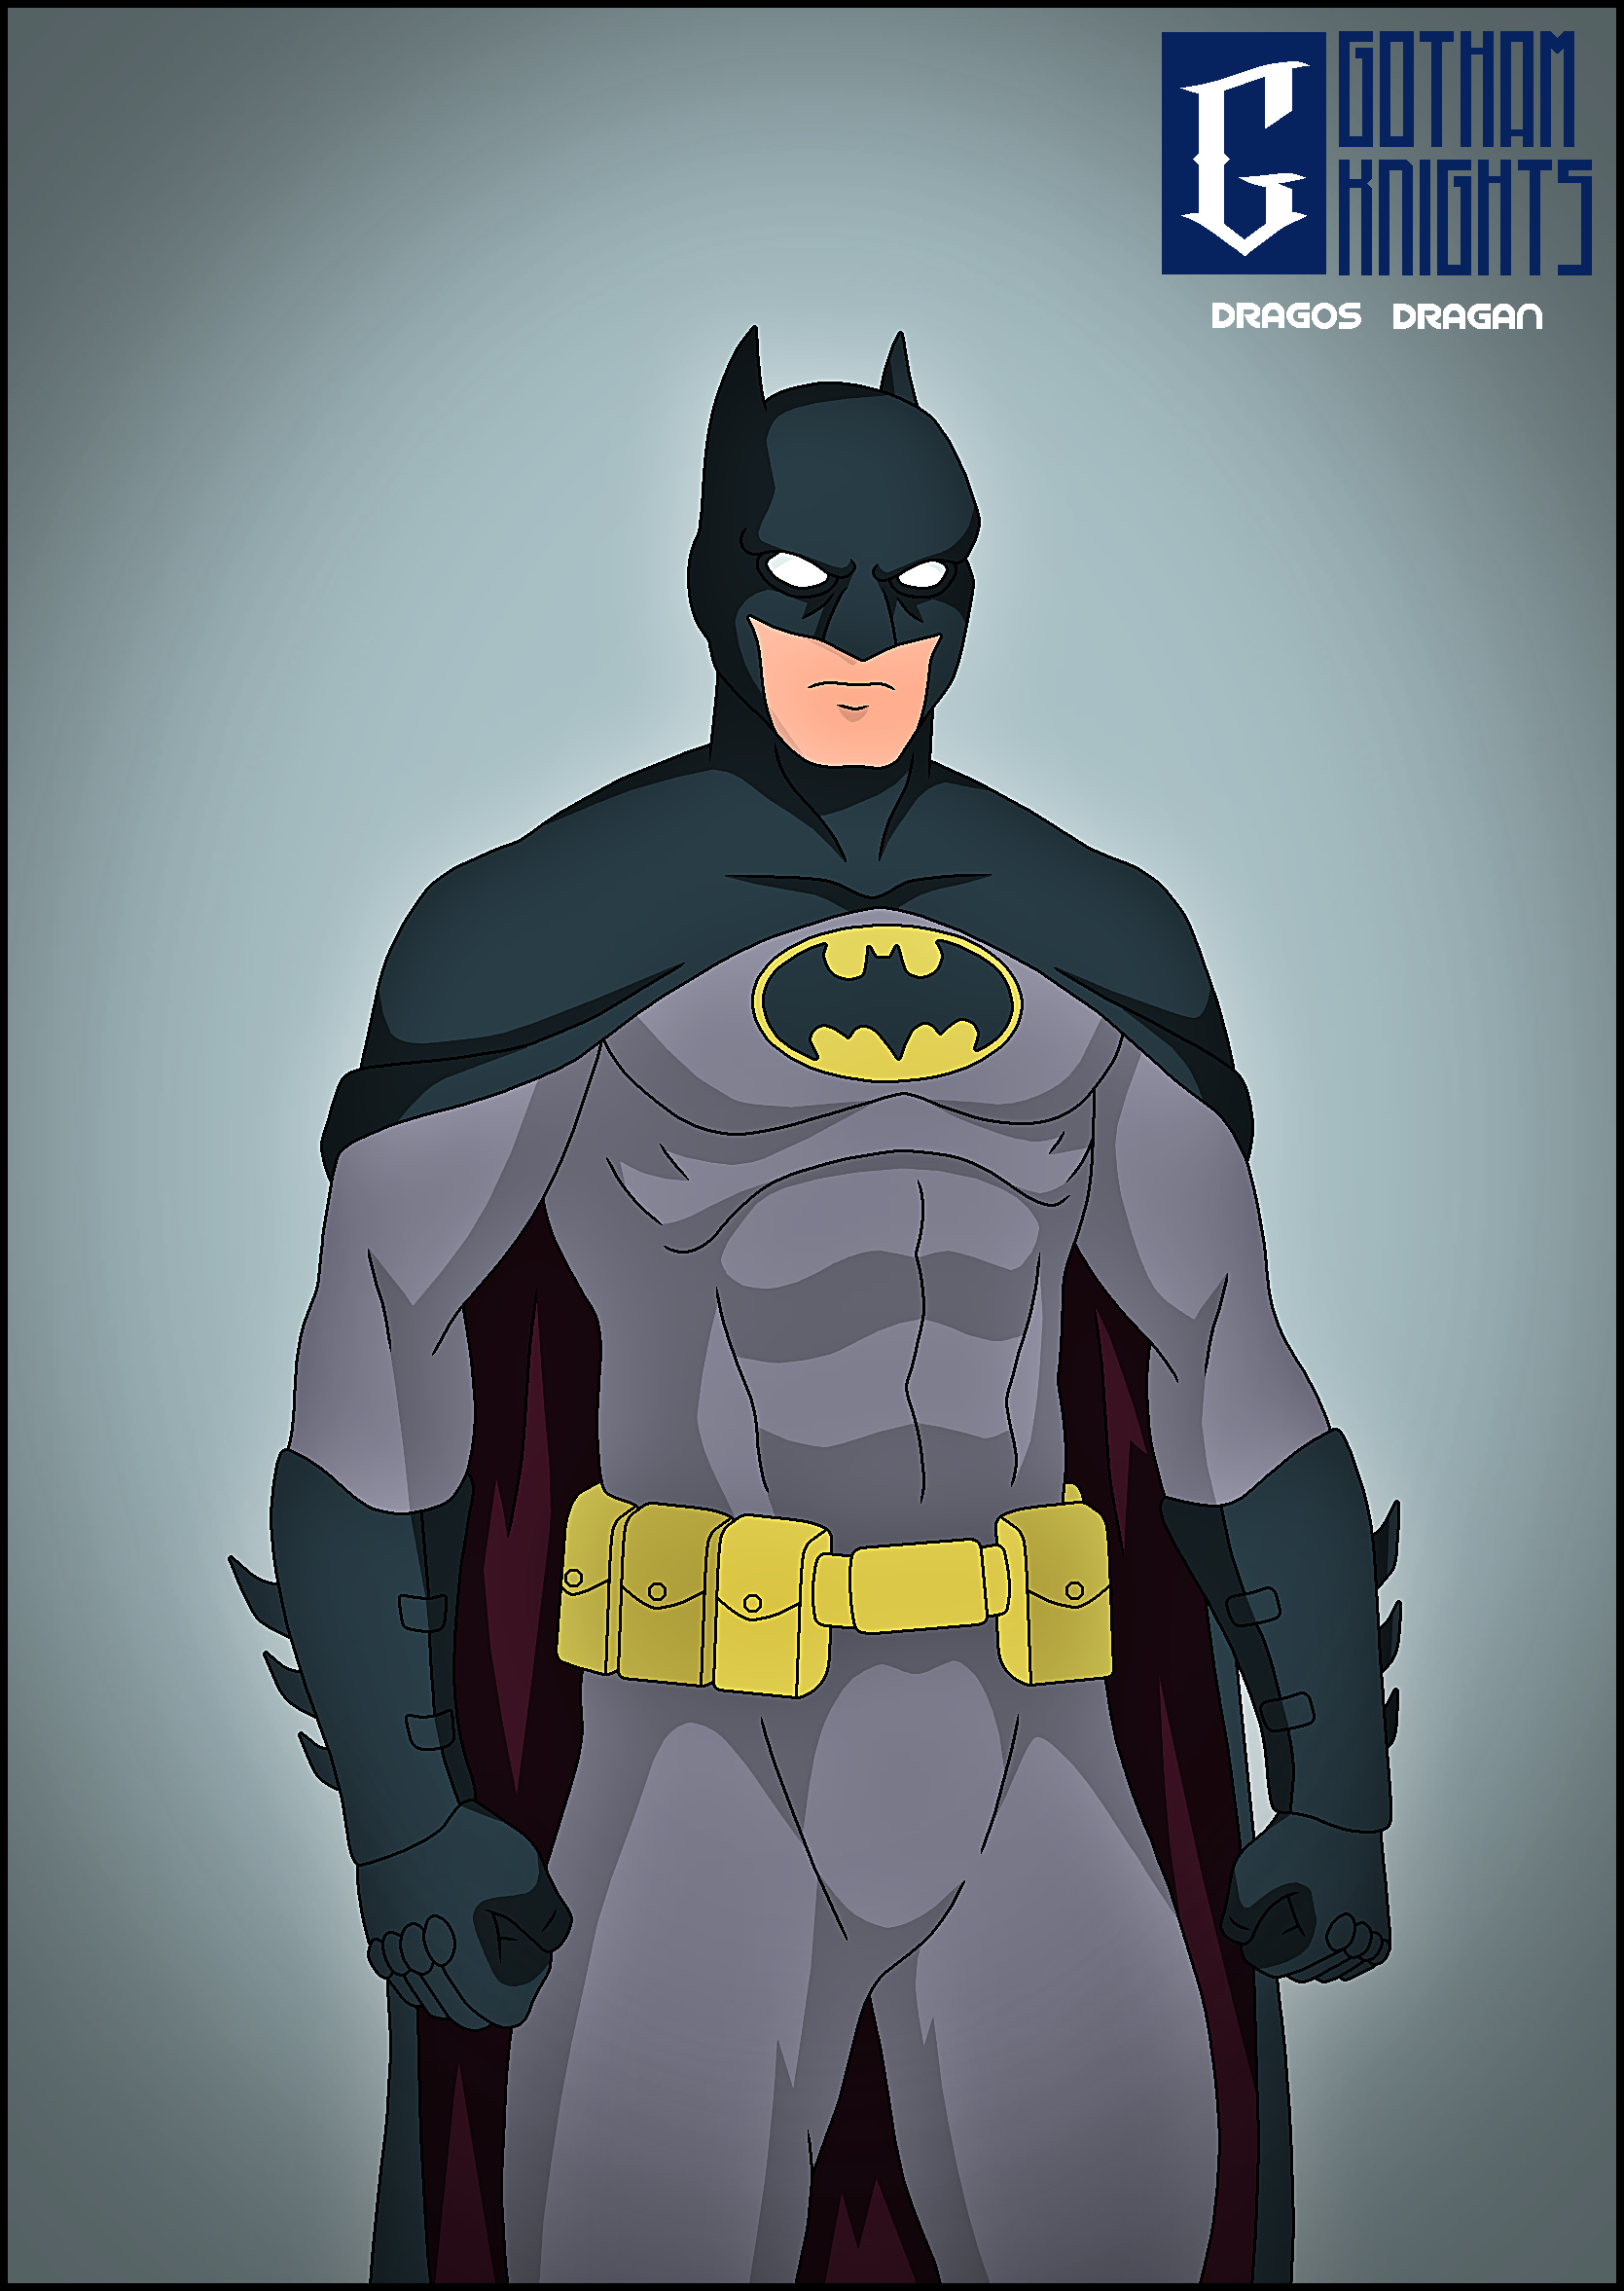 Batman - Gotham Knights - Phase 1 by DraganD on DeviantArt